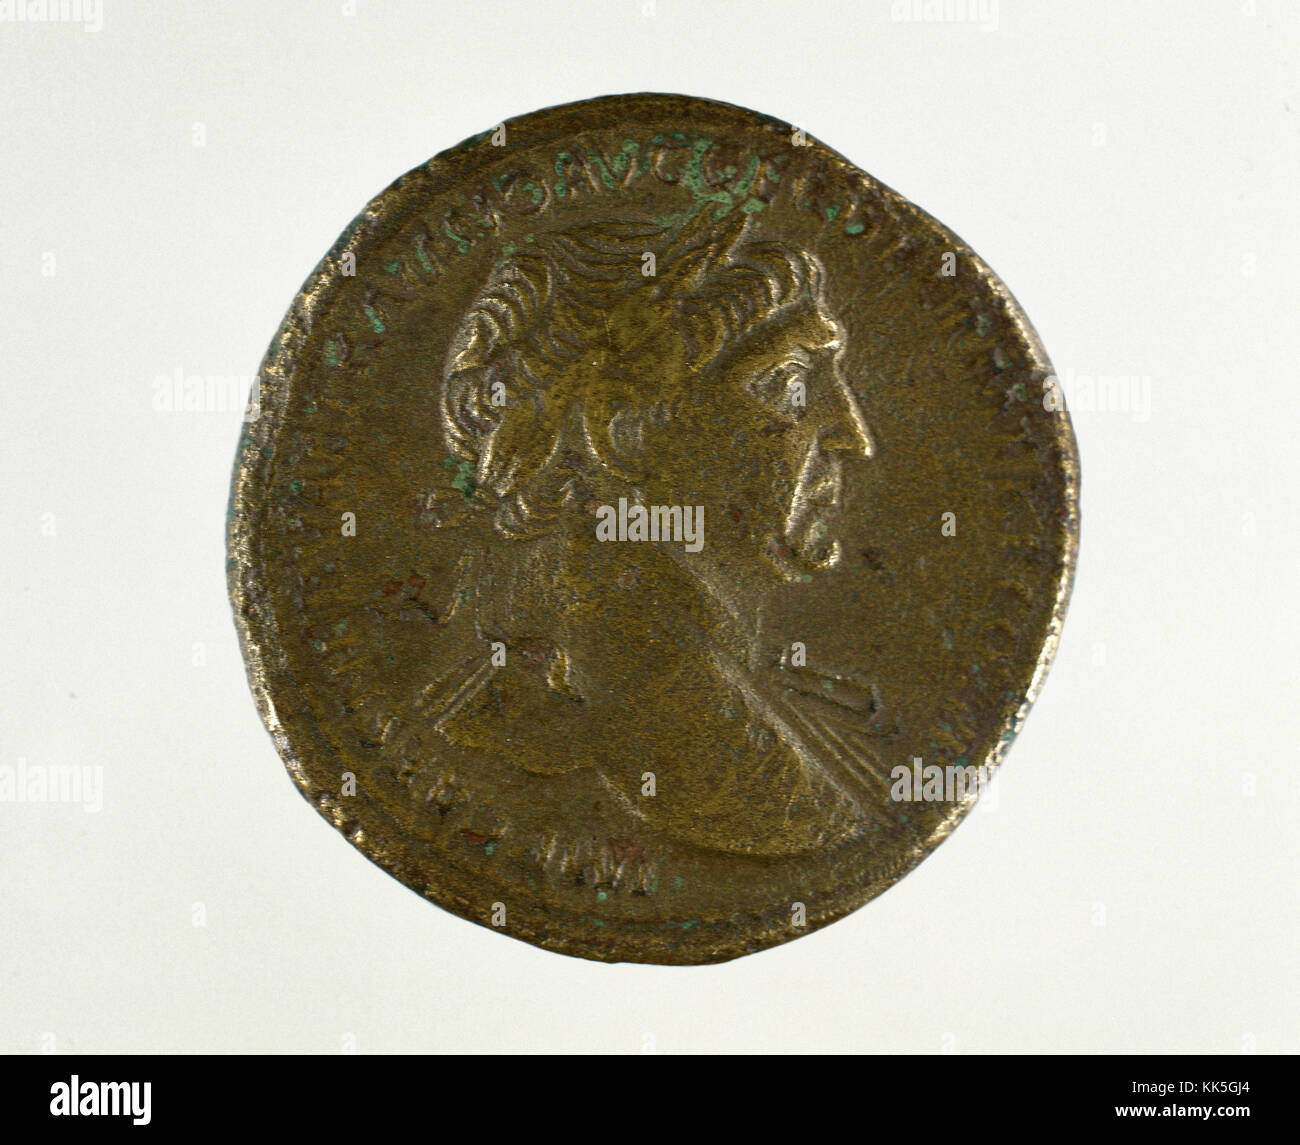 Sestertius. Bronze roman coin. Effigy of the Trajan emperor (53-117 AD). c. 98-139 AD. Adverse. Spain. National Museum of Roman Art. Merida, Spain. Stock Photo